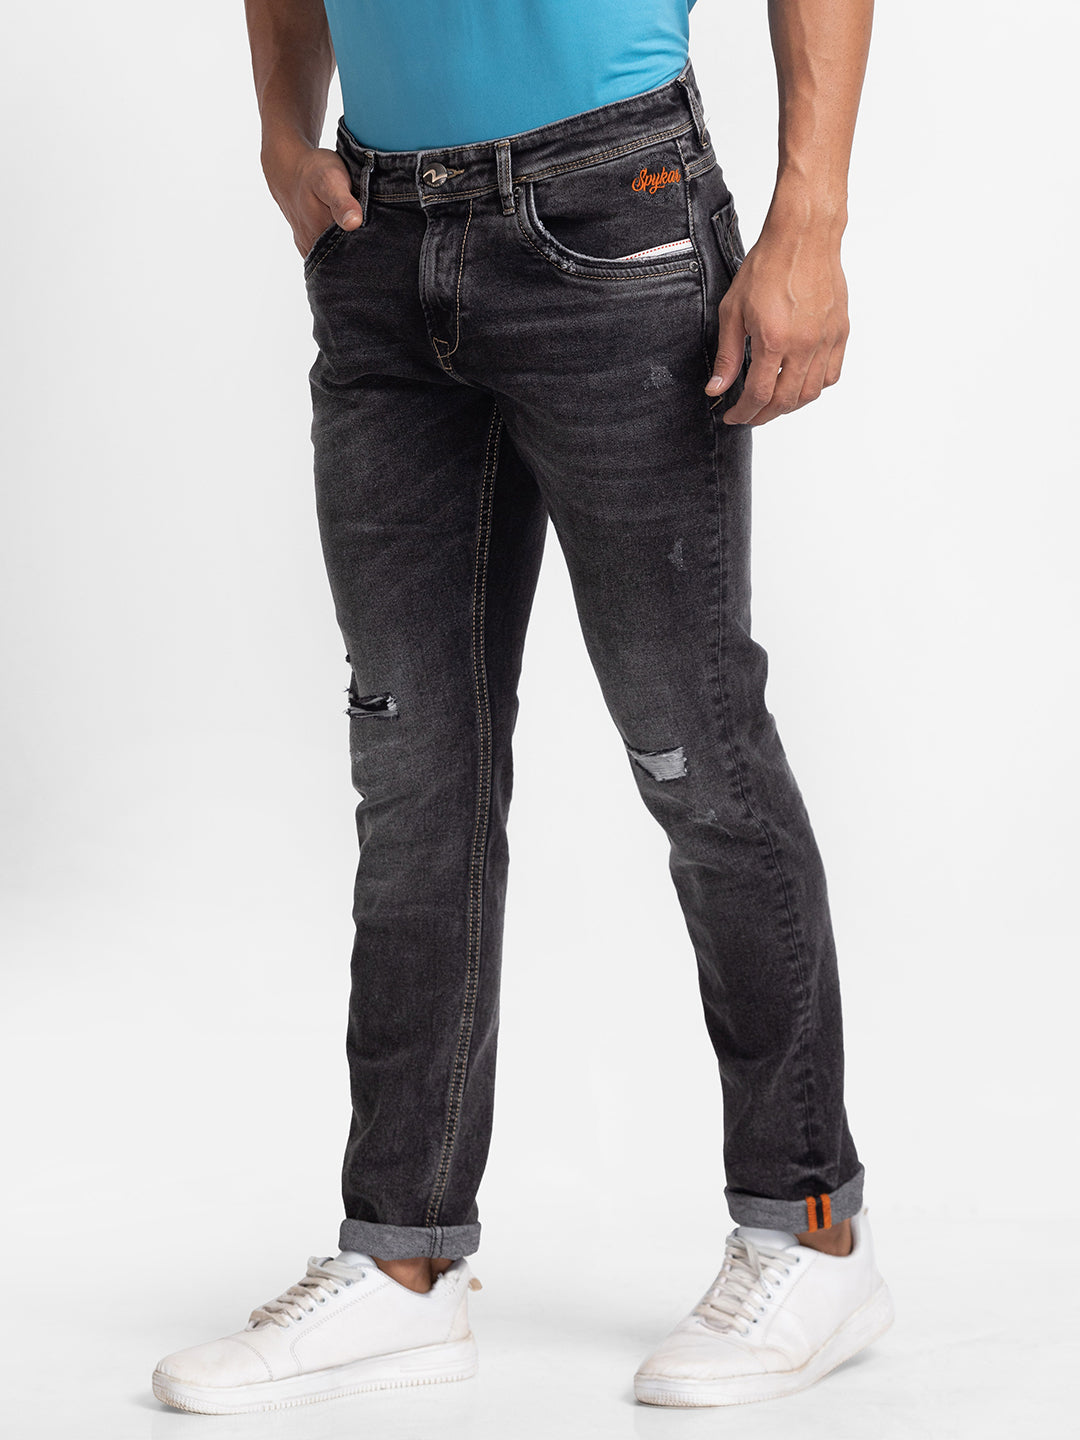 Spykar Carbon Black Cotton Slim Fit Narrow Length Jeans For Men (Skinny)